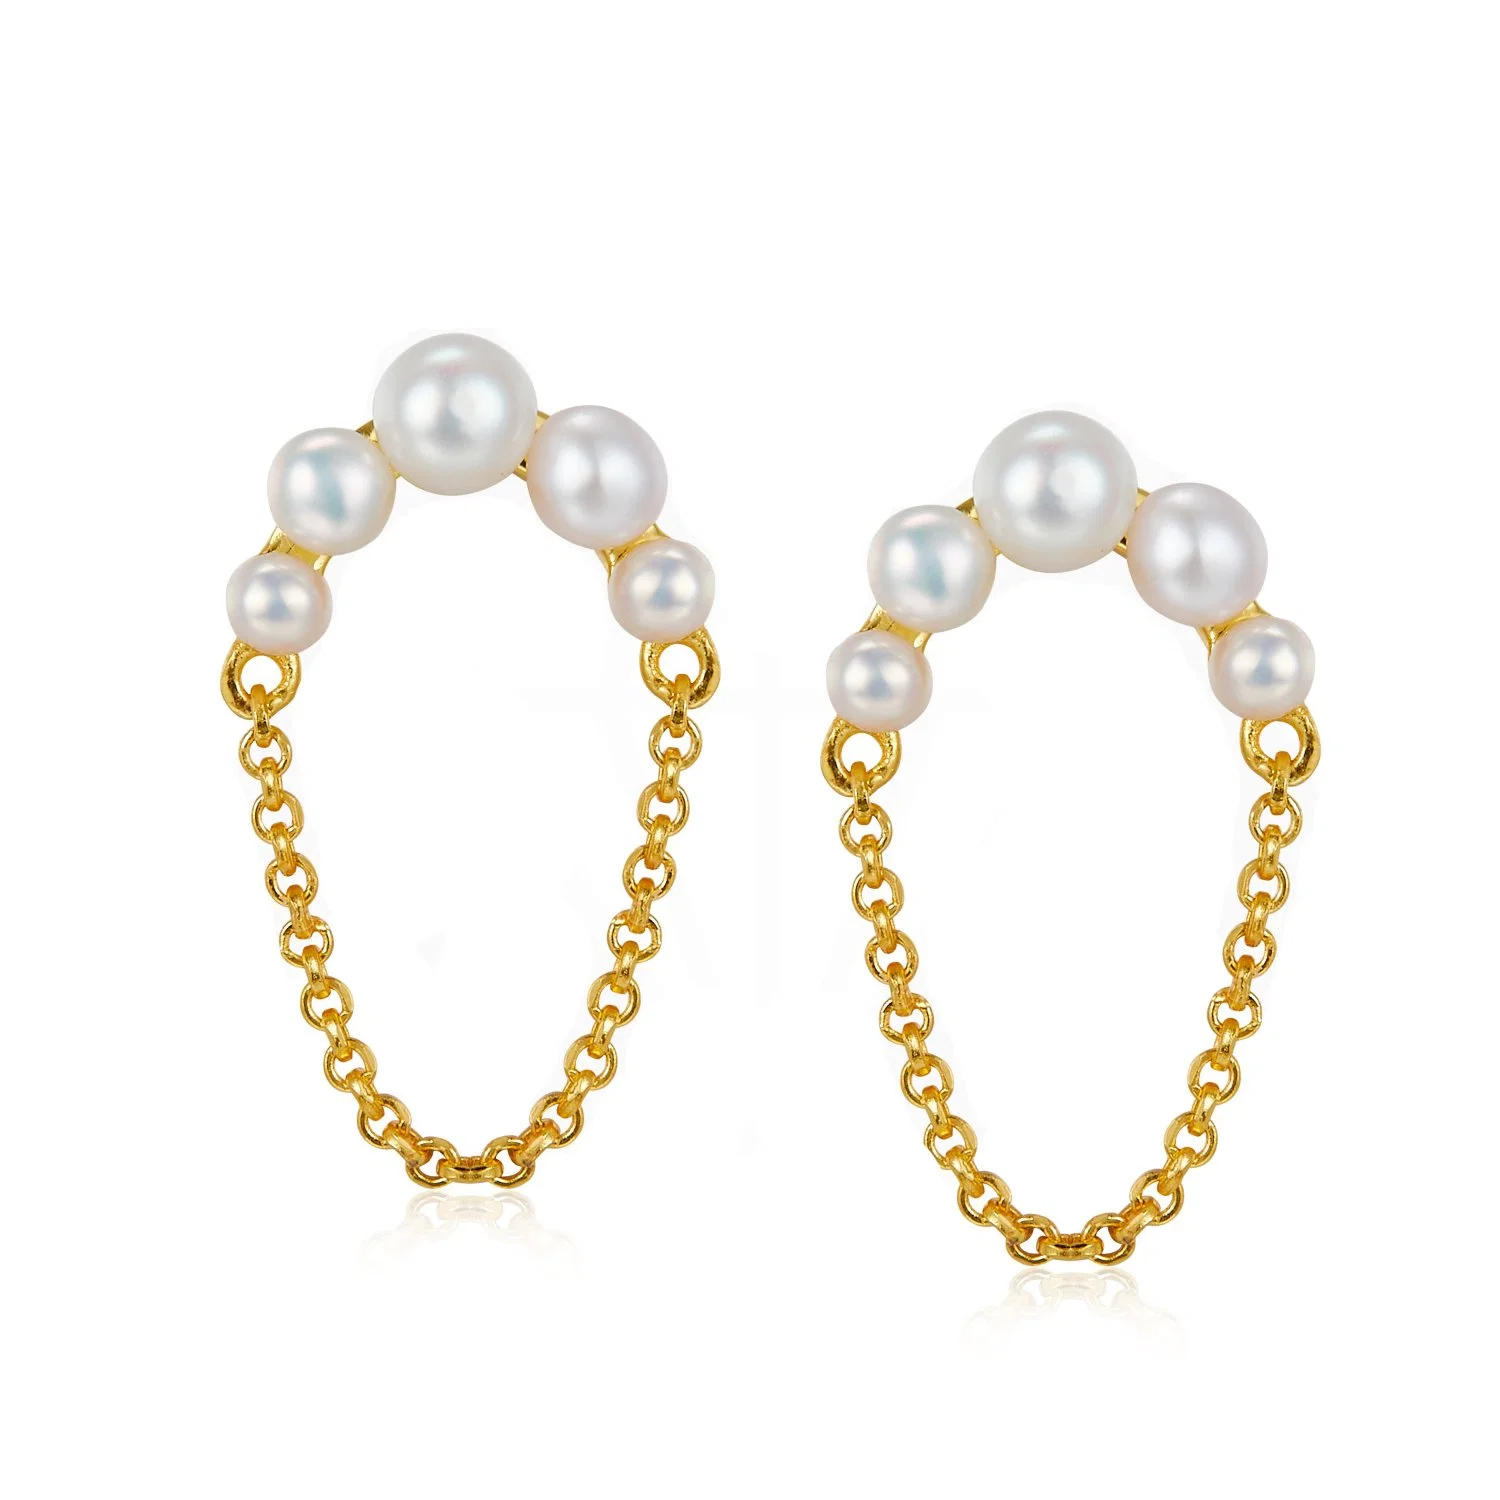 Fashion Jewelry Freshwater Pearl Earrings 18K Gold Plated Sterling Silver Jewelry 925 Silver Earrings for Women